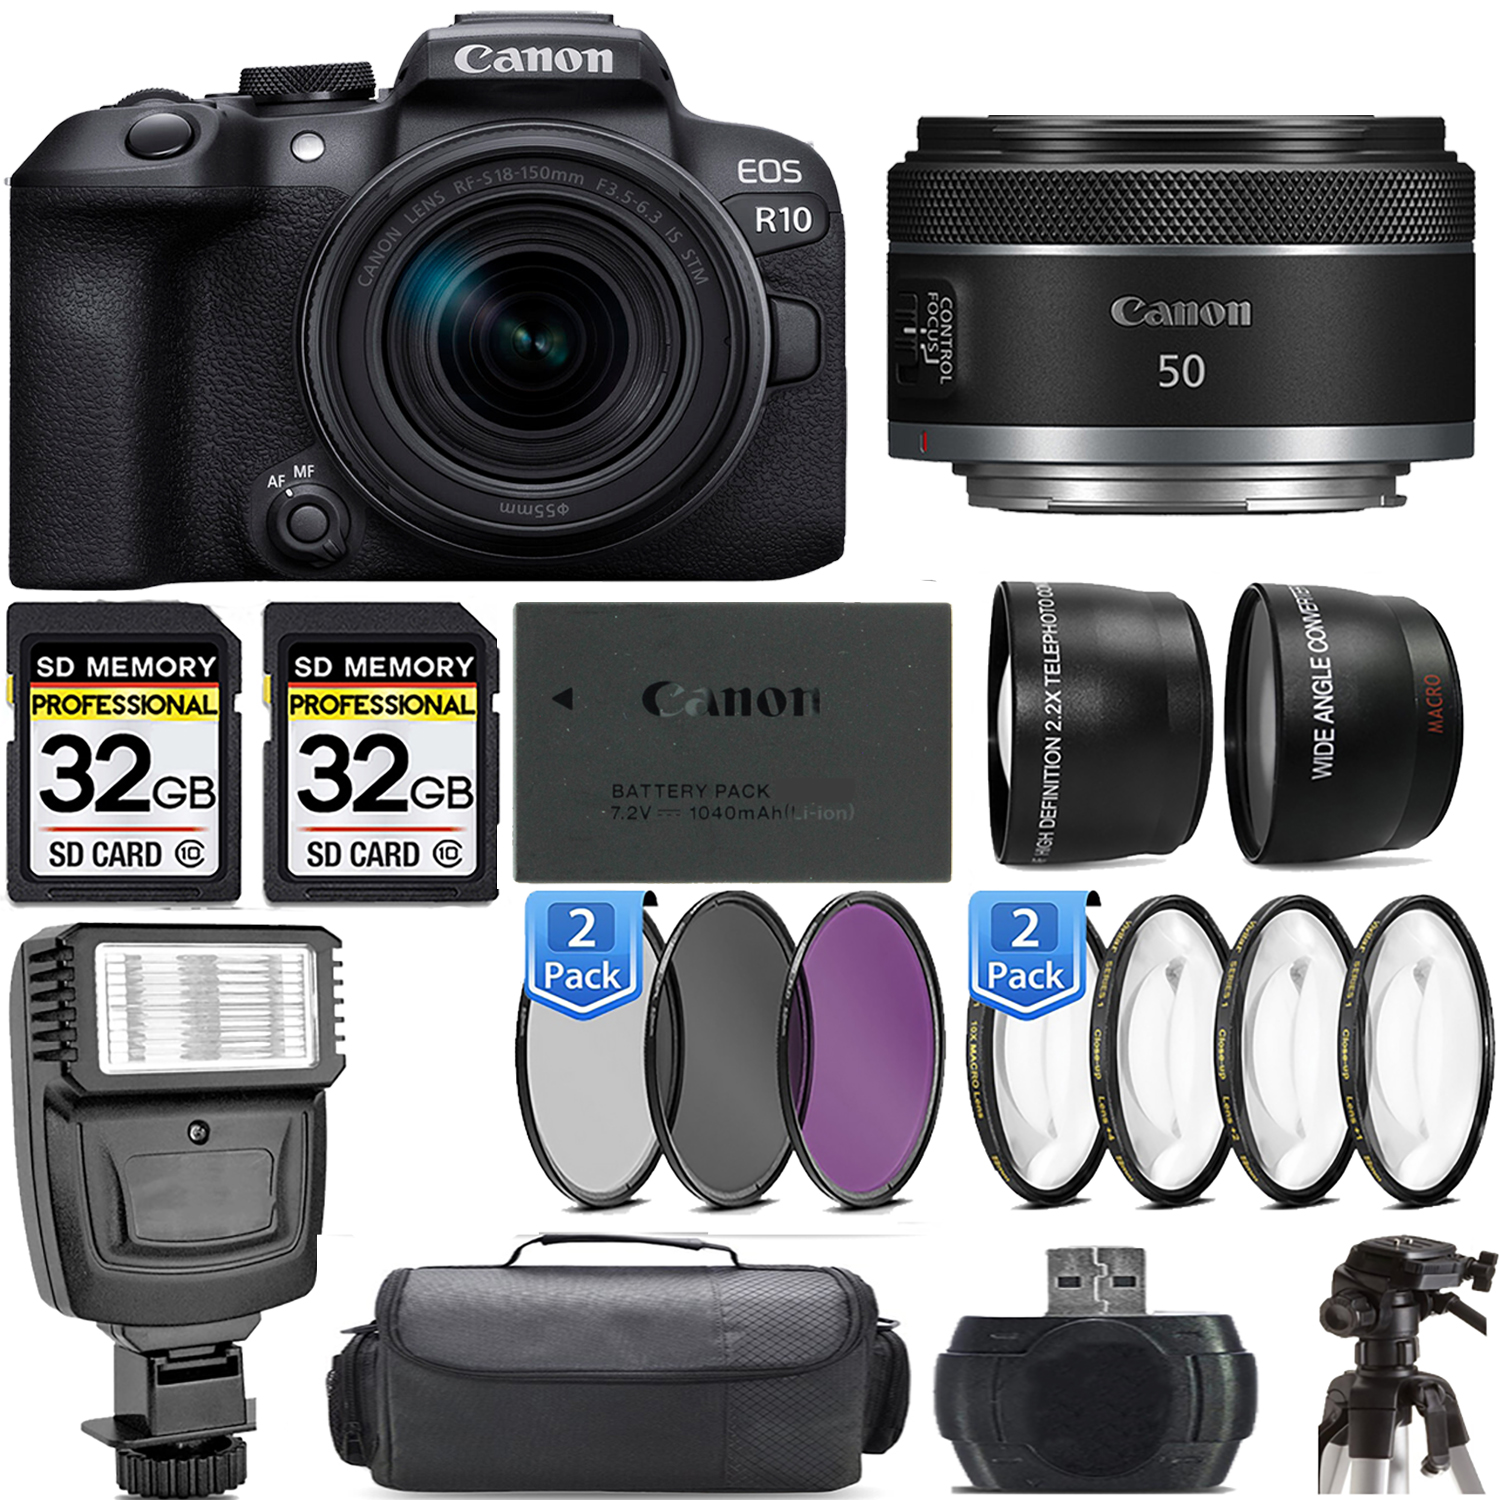 EOS R10 Camera + 18-150mm Lens + 50mm f/1.8 STM Lens + Flash - Kit *FREE SHIPPING*